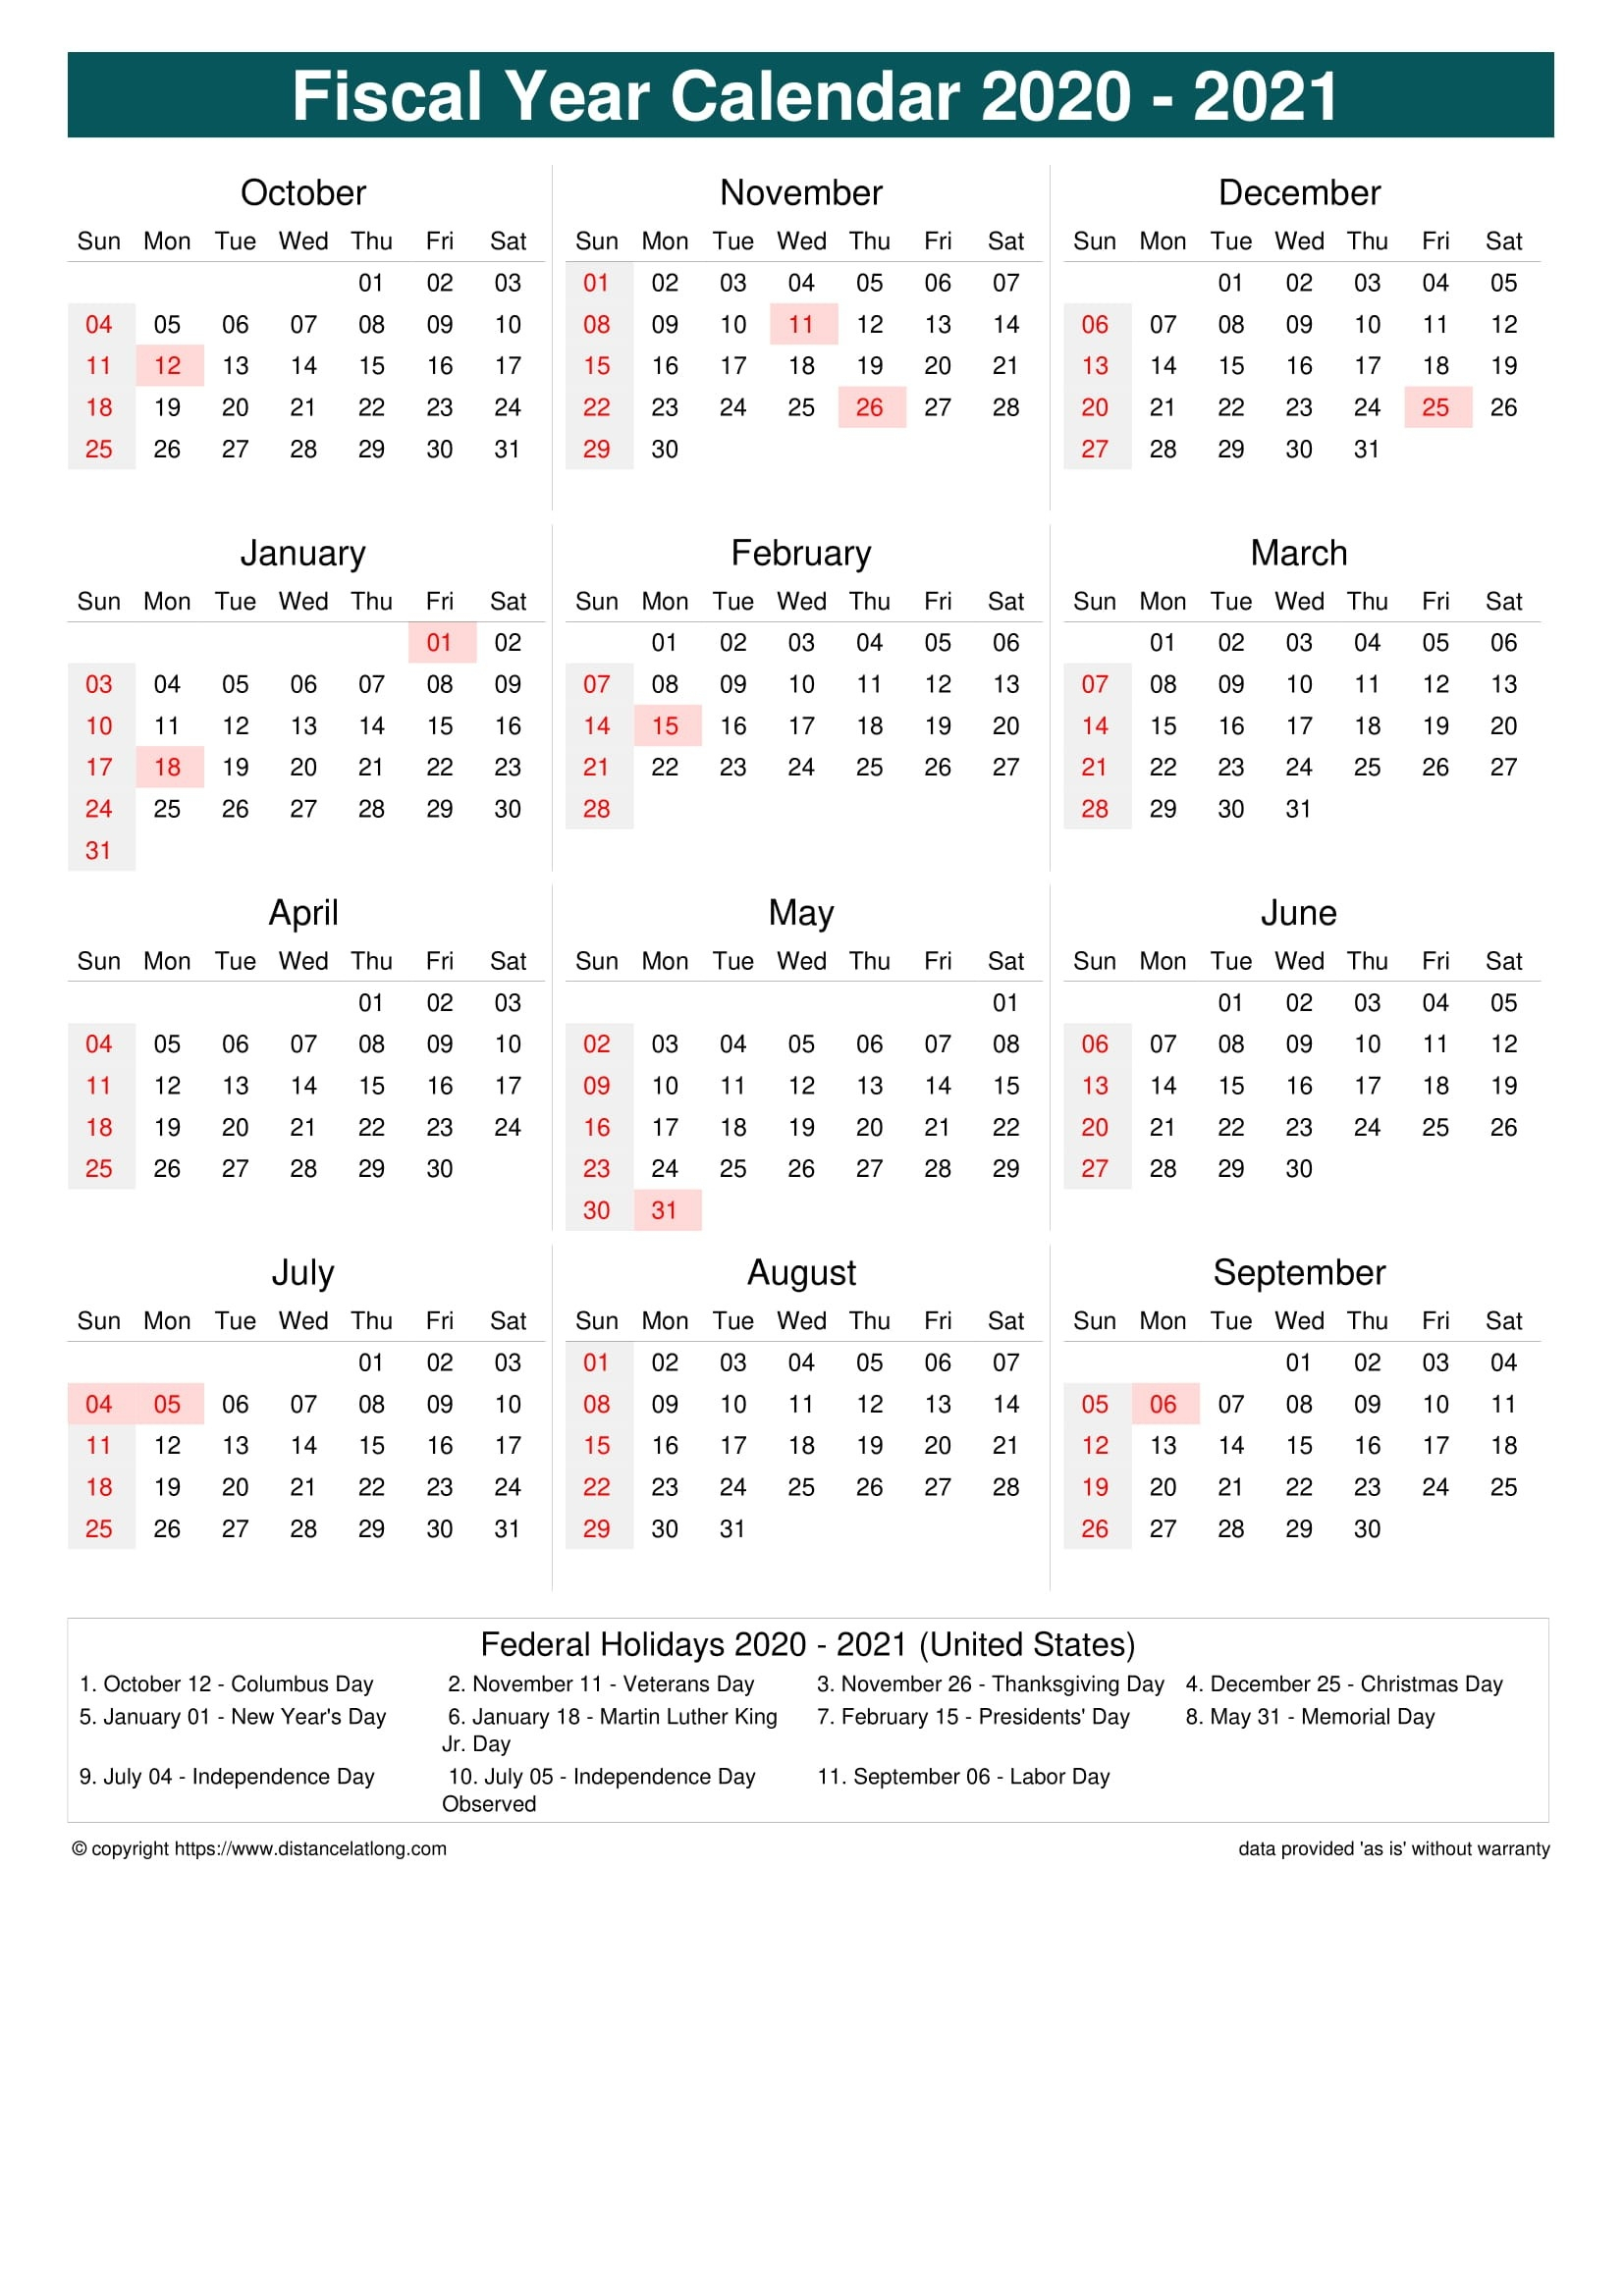 Fiscal Year Australia 2021 - Template Calendar Design